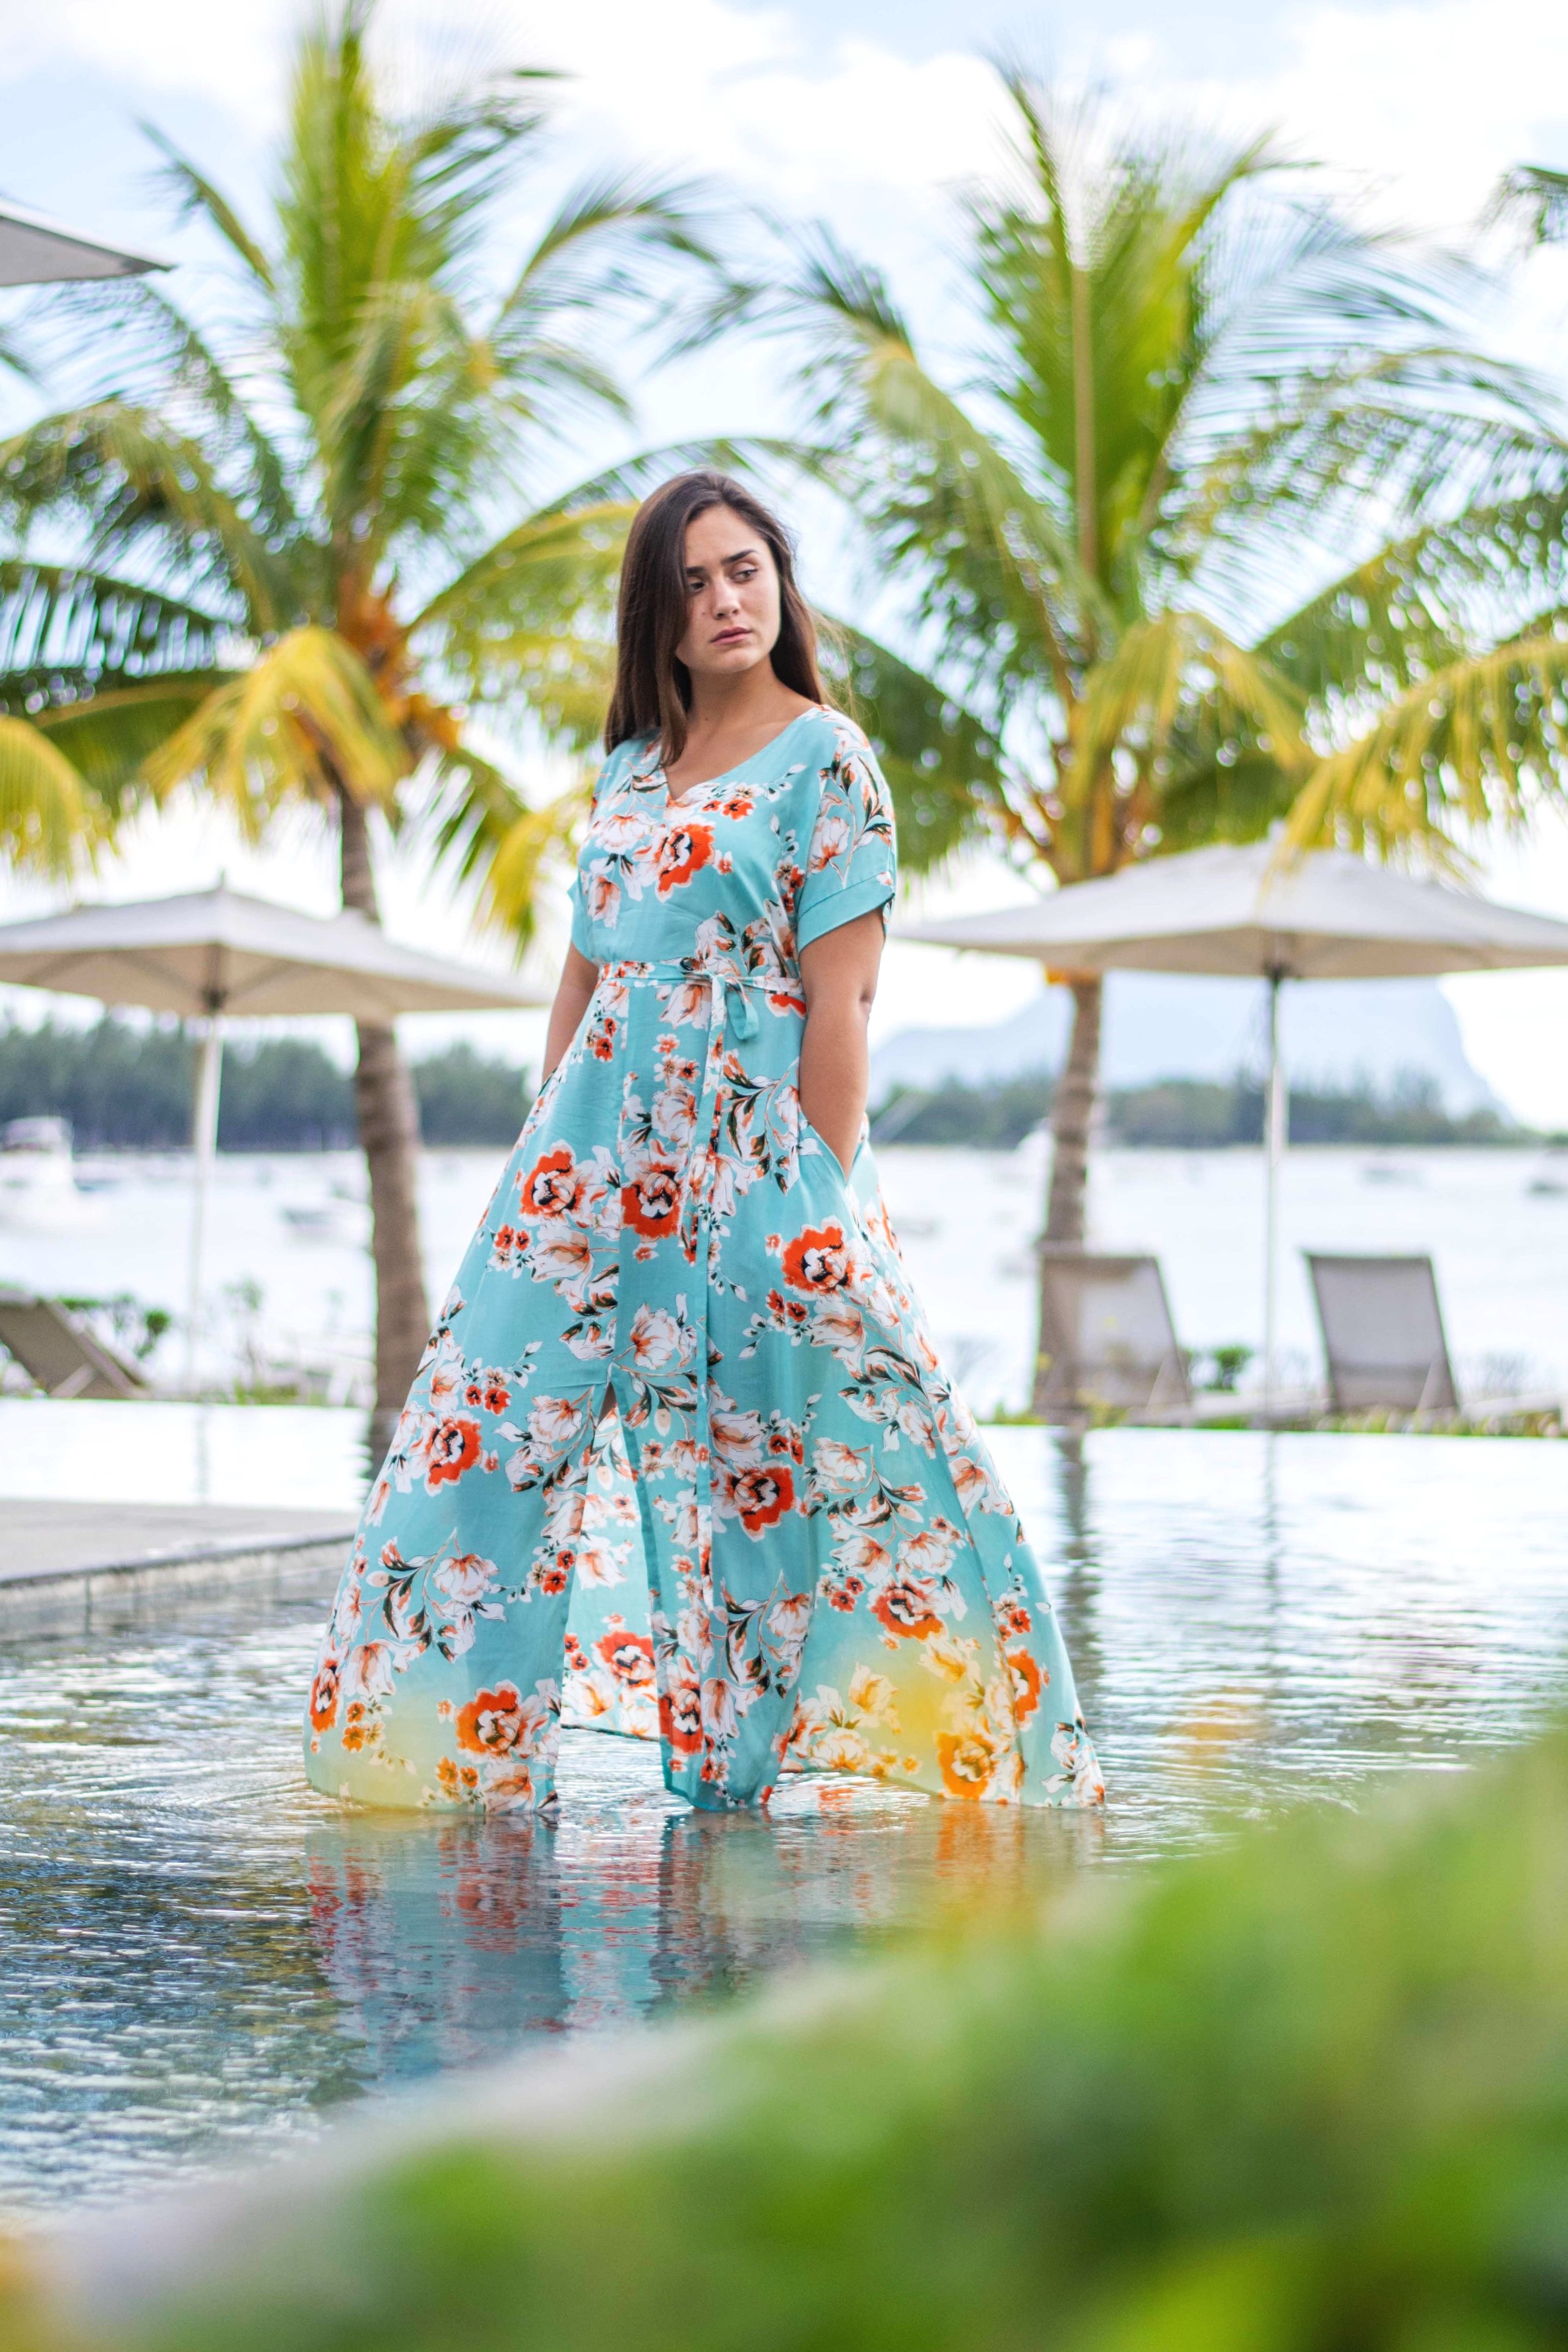   AS Mauritius   Exclusive women designer wear made locally.  Instagram:  https://www.instagram.com/as_mauritius/  